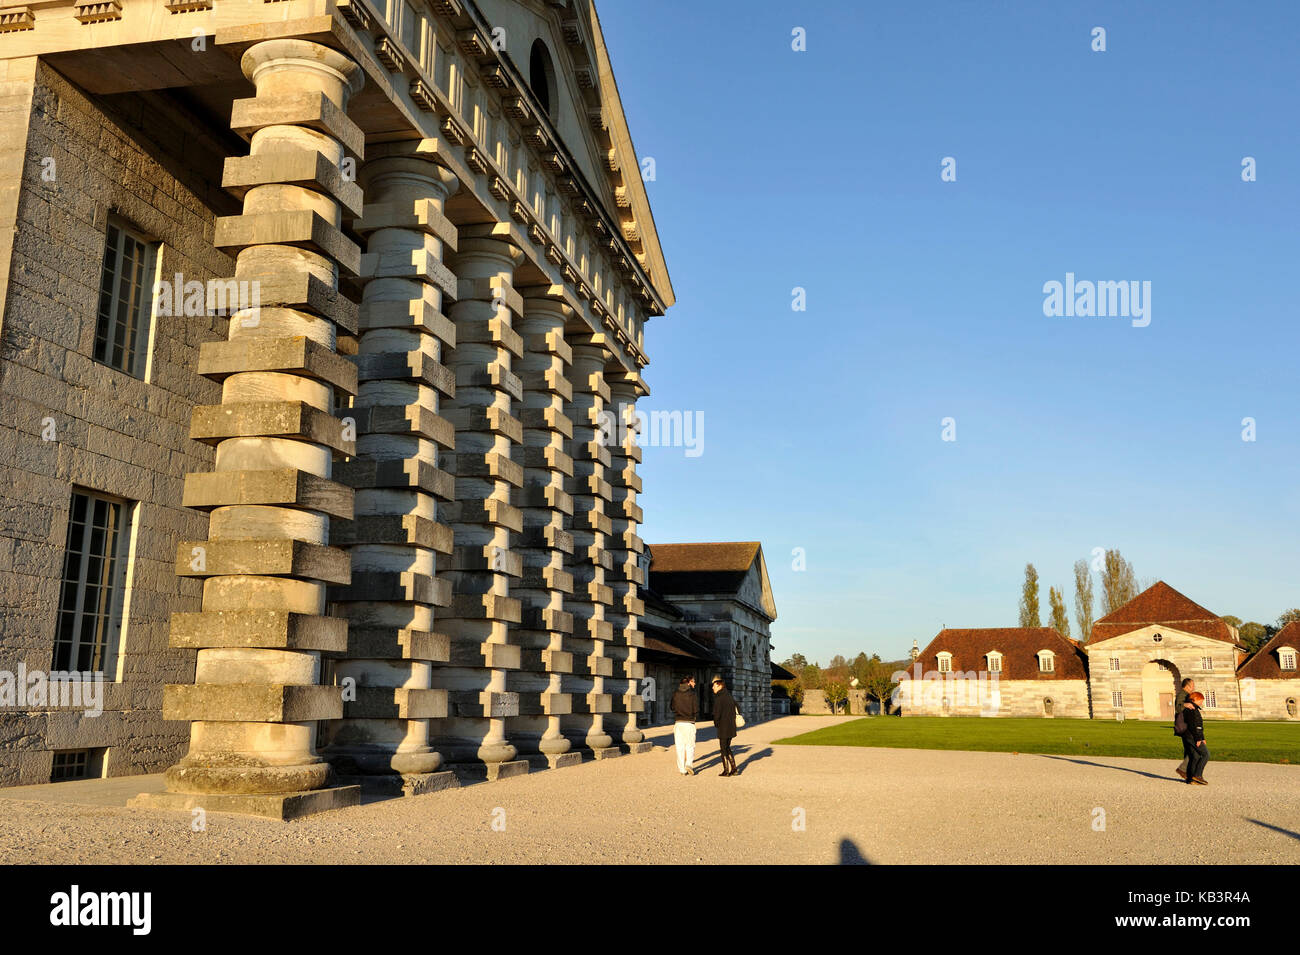 Francia, Doubs, arc et senans, arc et senans salina reale costruito dall'architetto Claude nicolas ledoux, elencato come patrimonio mondiale dall' UNESCO Foto Stock